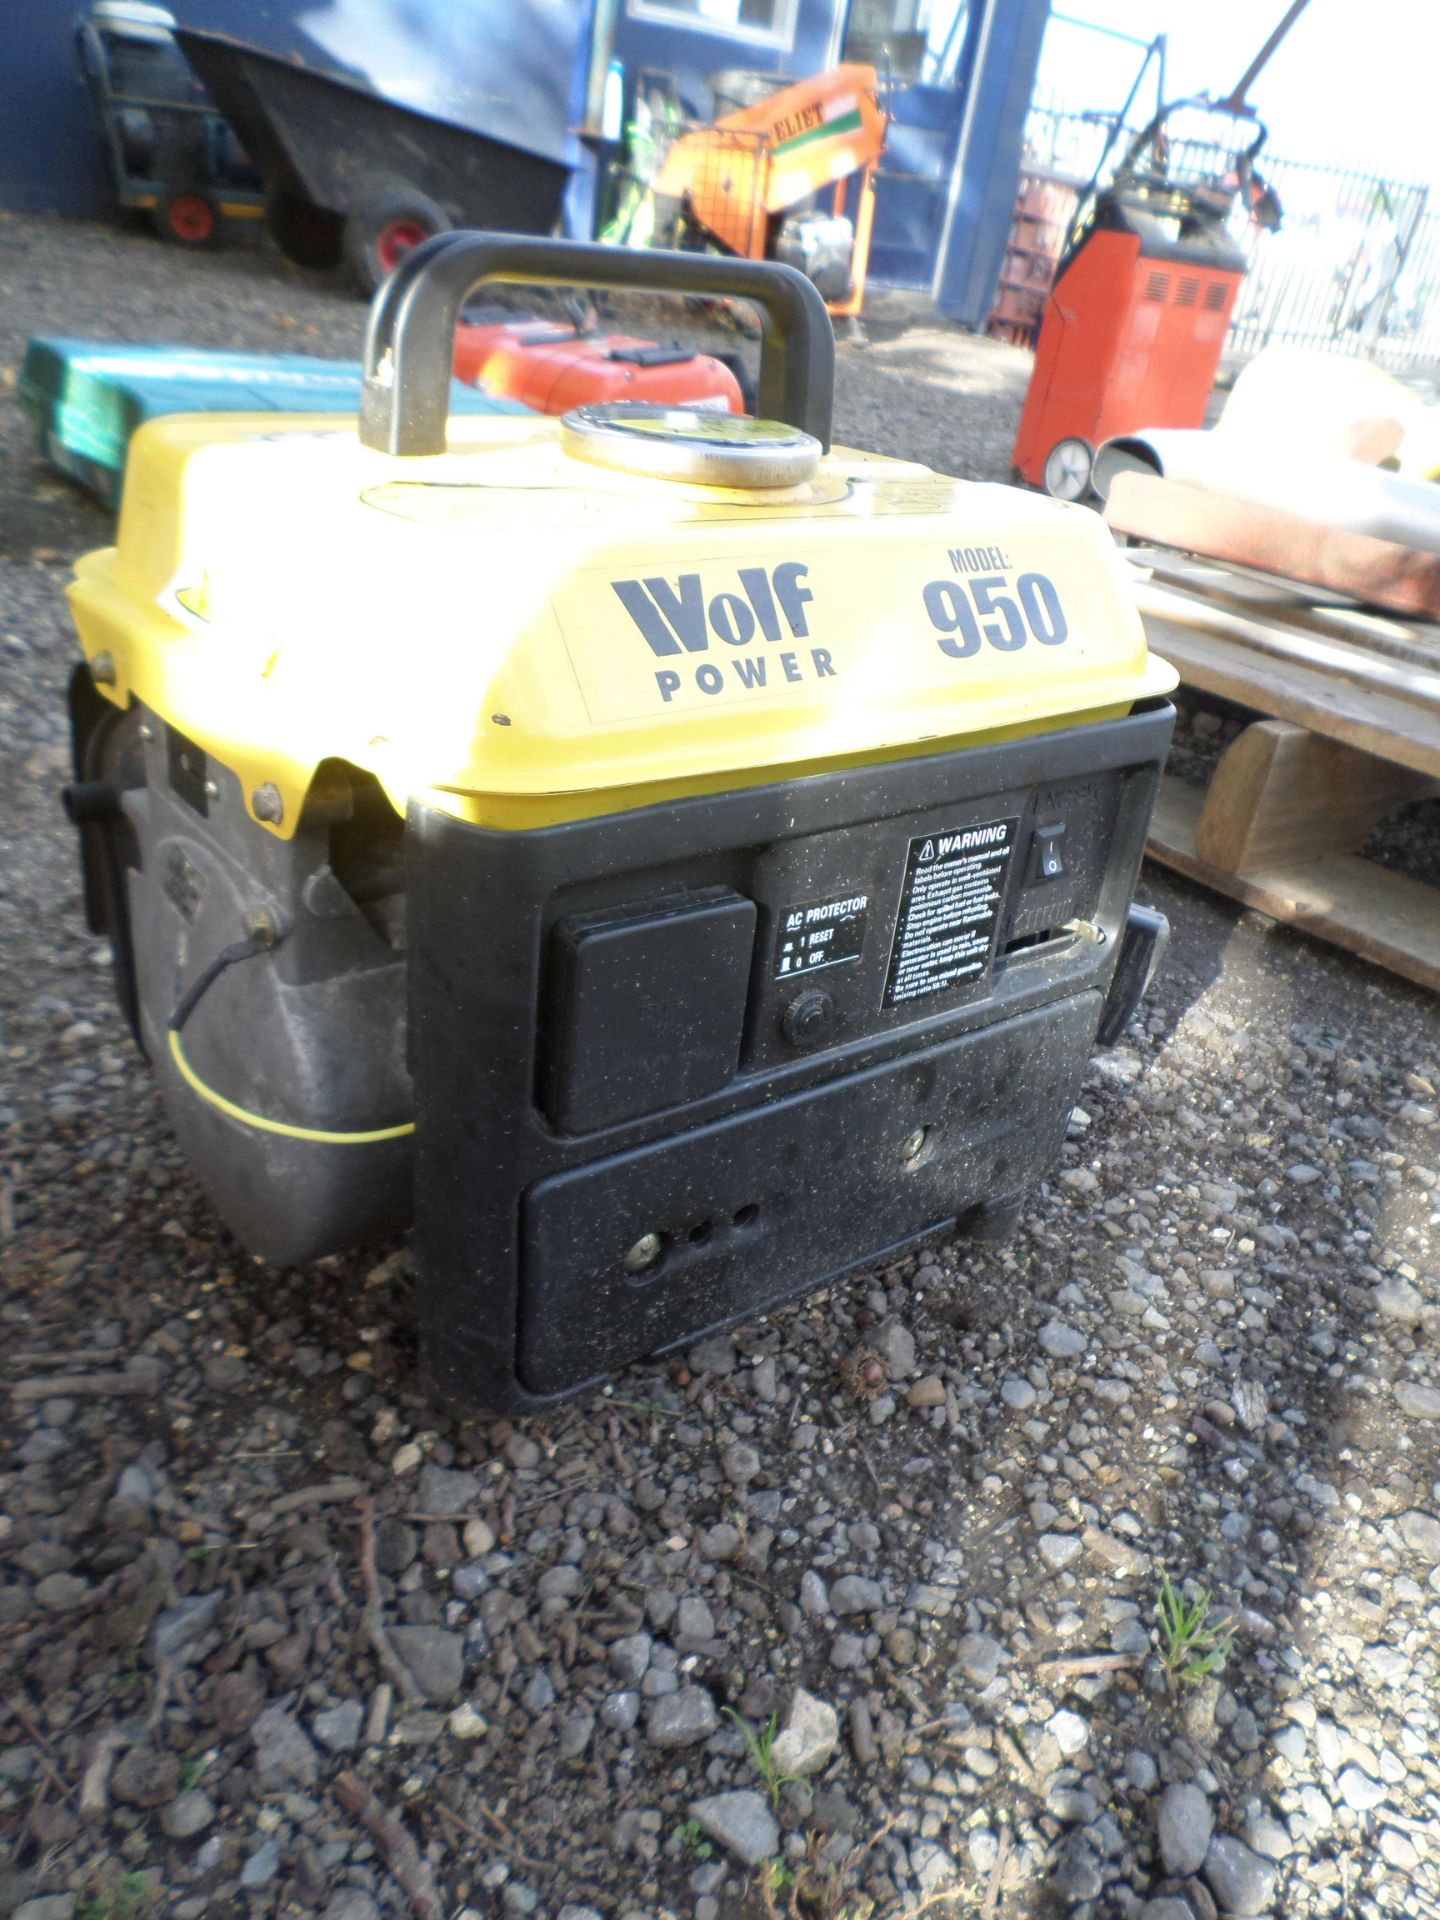 Wolf Power 950 model petrol generator NO VAT - Image 2 of 2